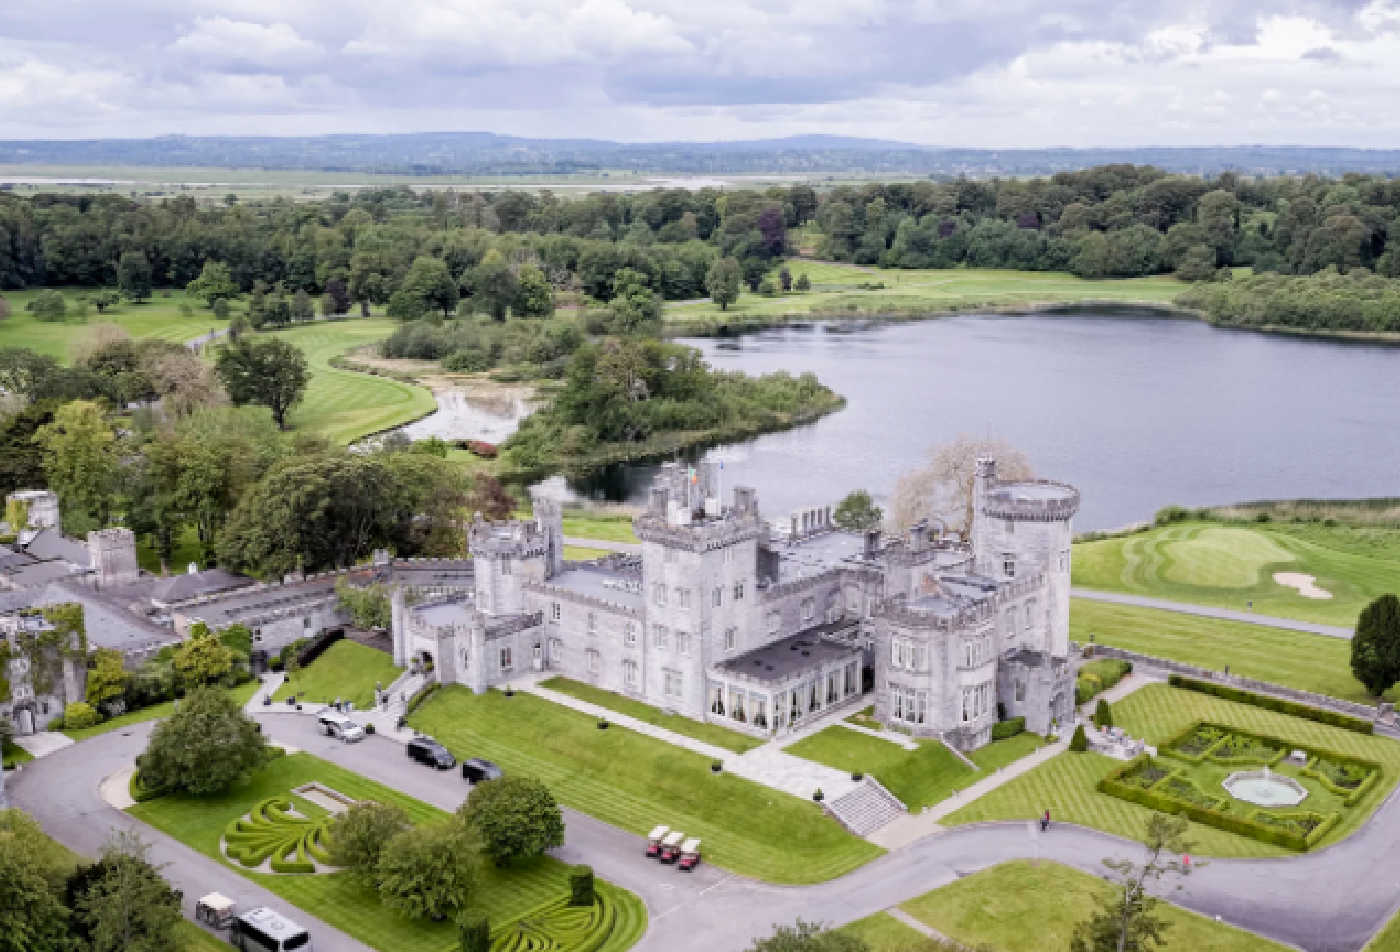 Dromoland Castle, Dromoland in Ireland